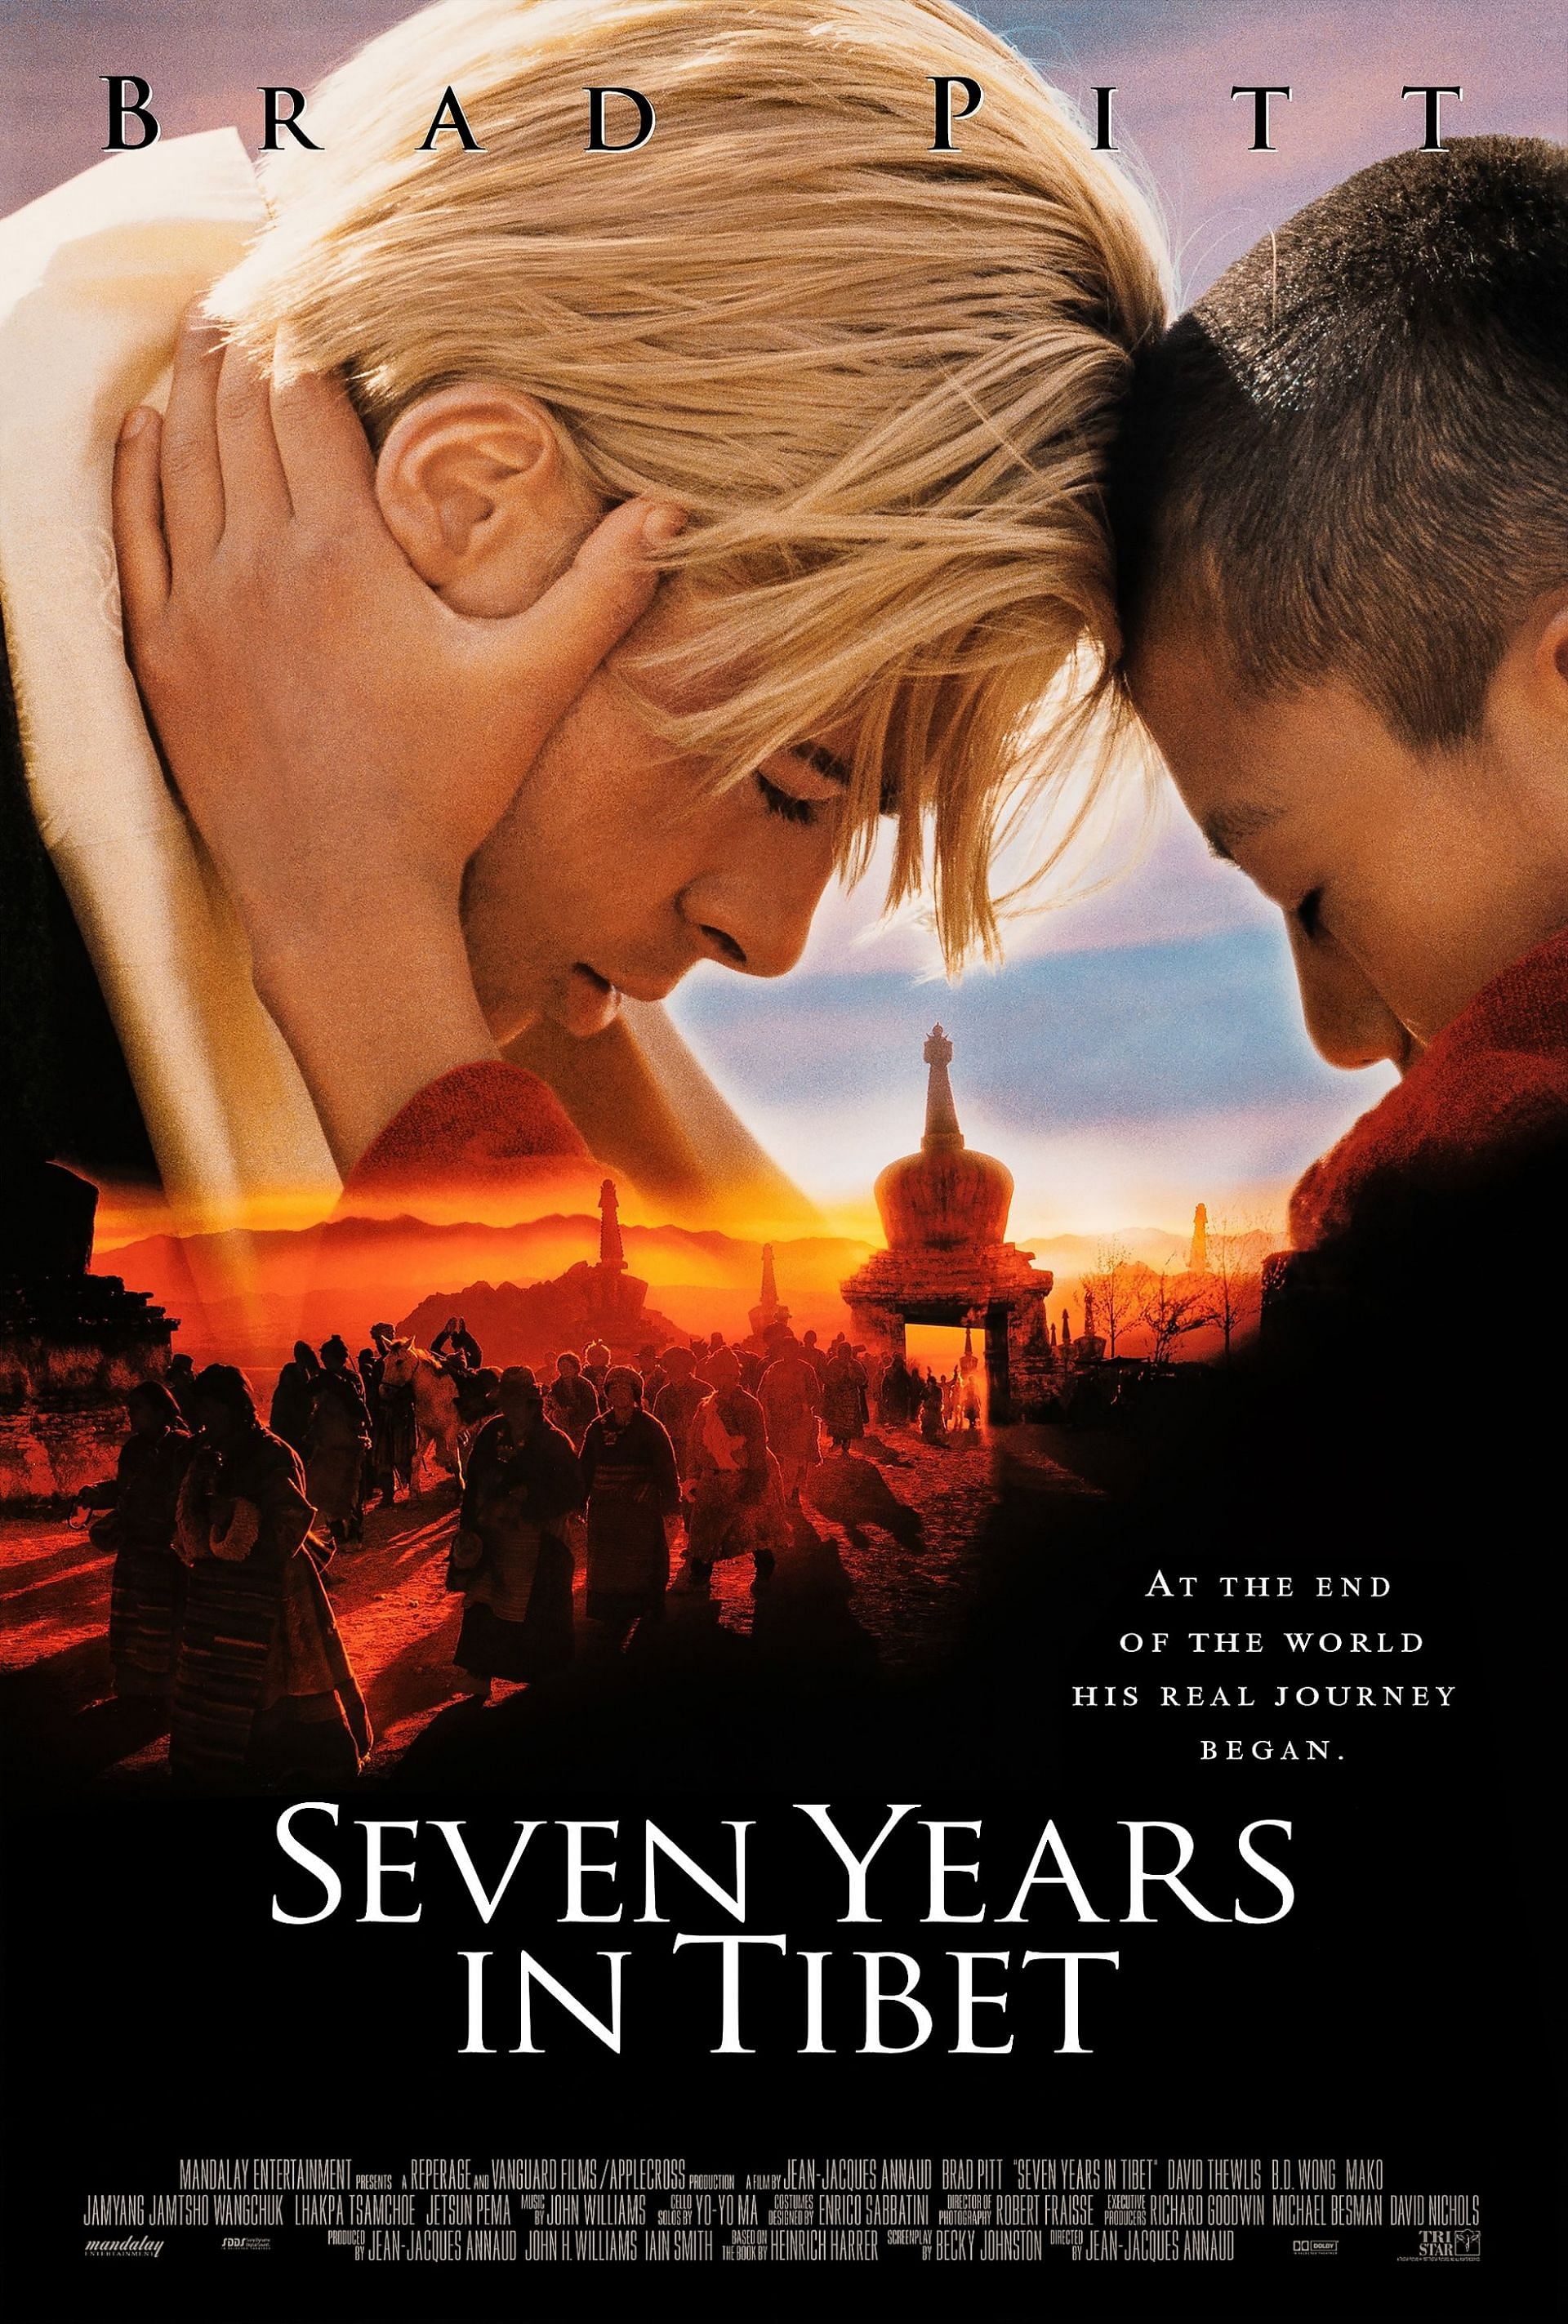 Seven Years in Tibet (Image via Sony)